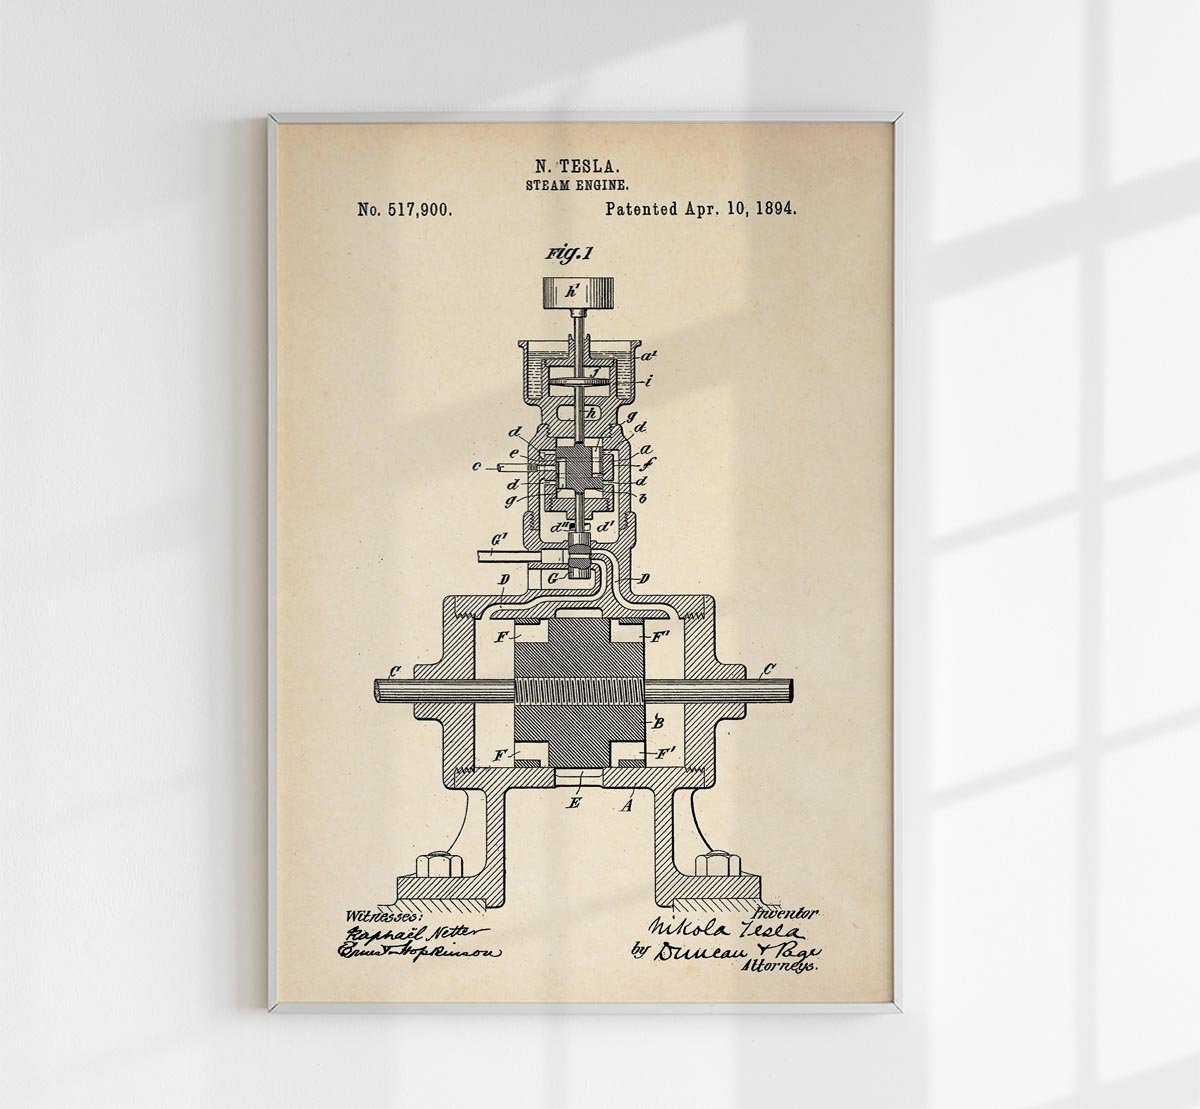 Tesla's Steam Engine Patent Poster